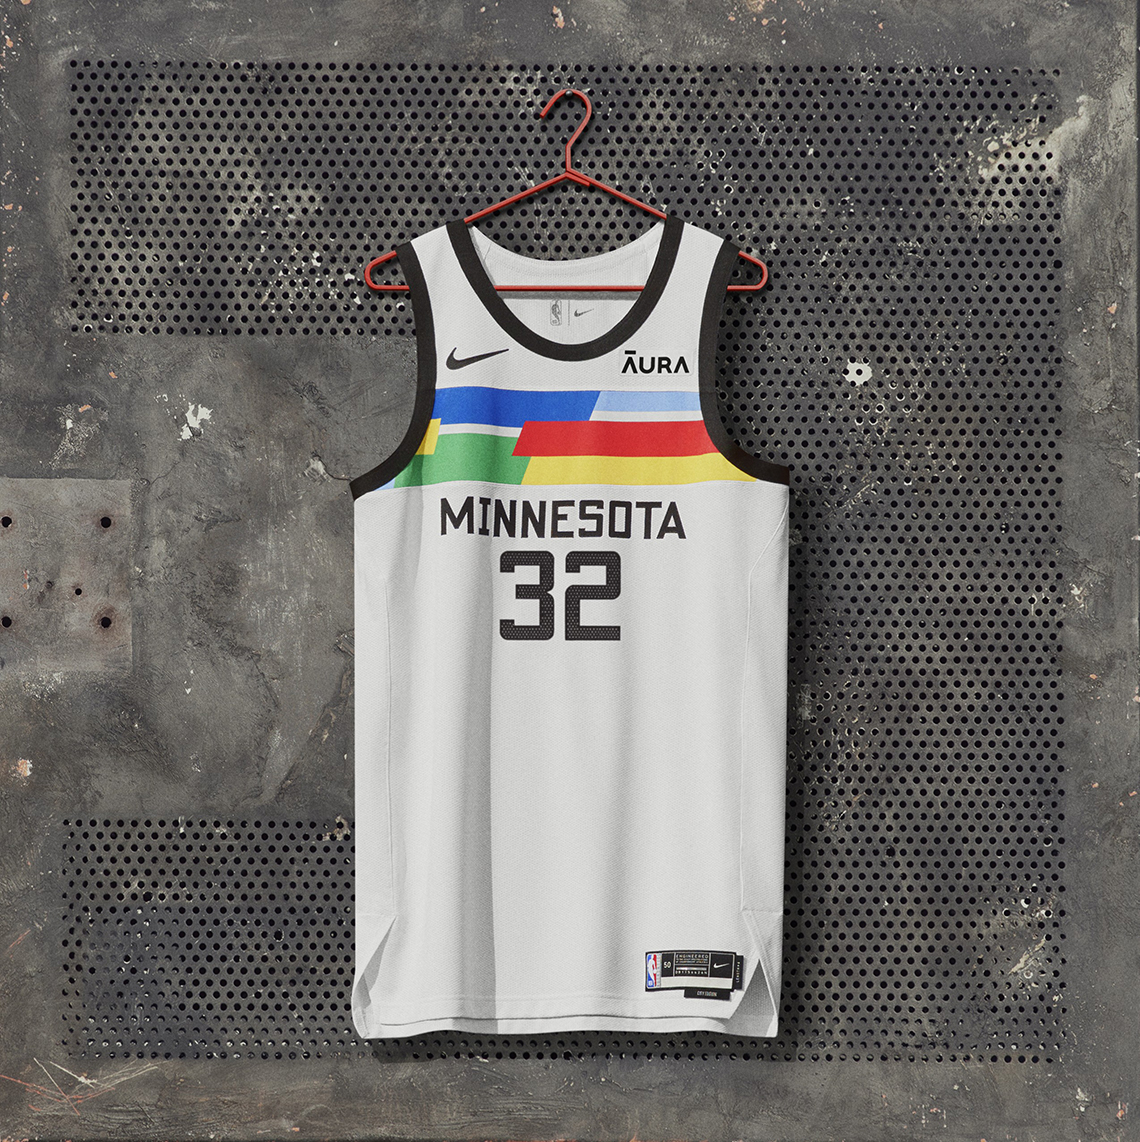 Nike NBA City Edition Jerseys Uniforms 2022 2023